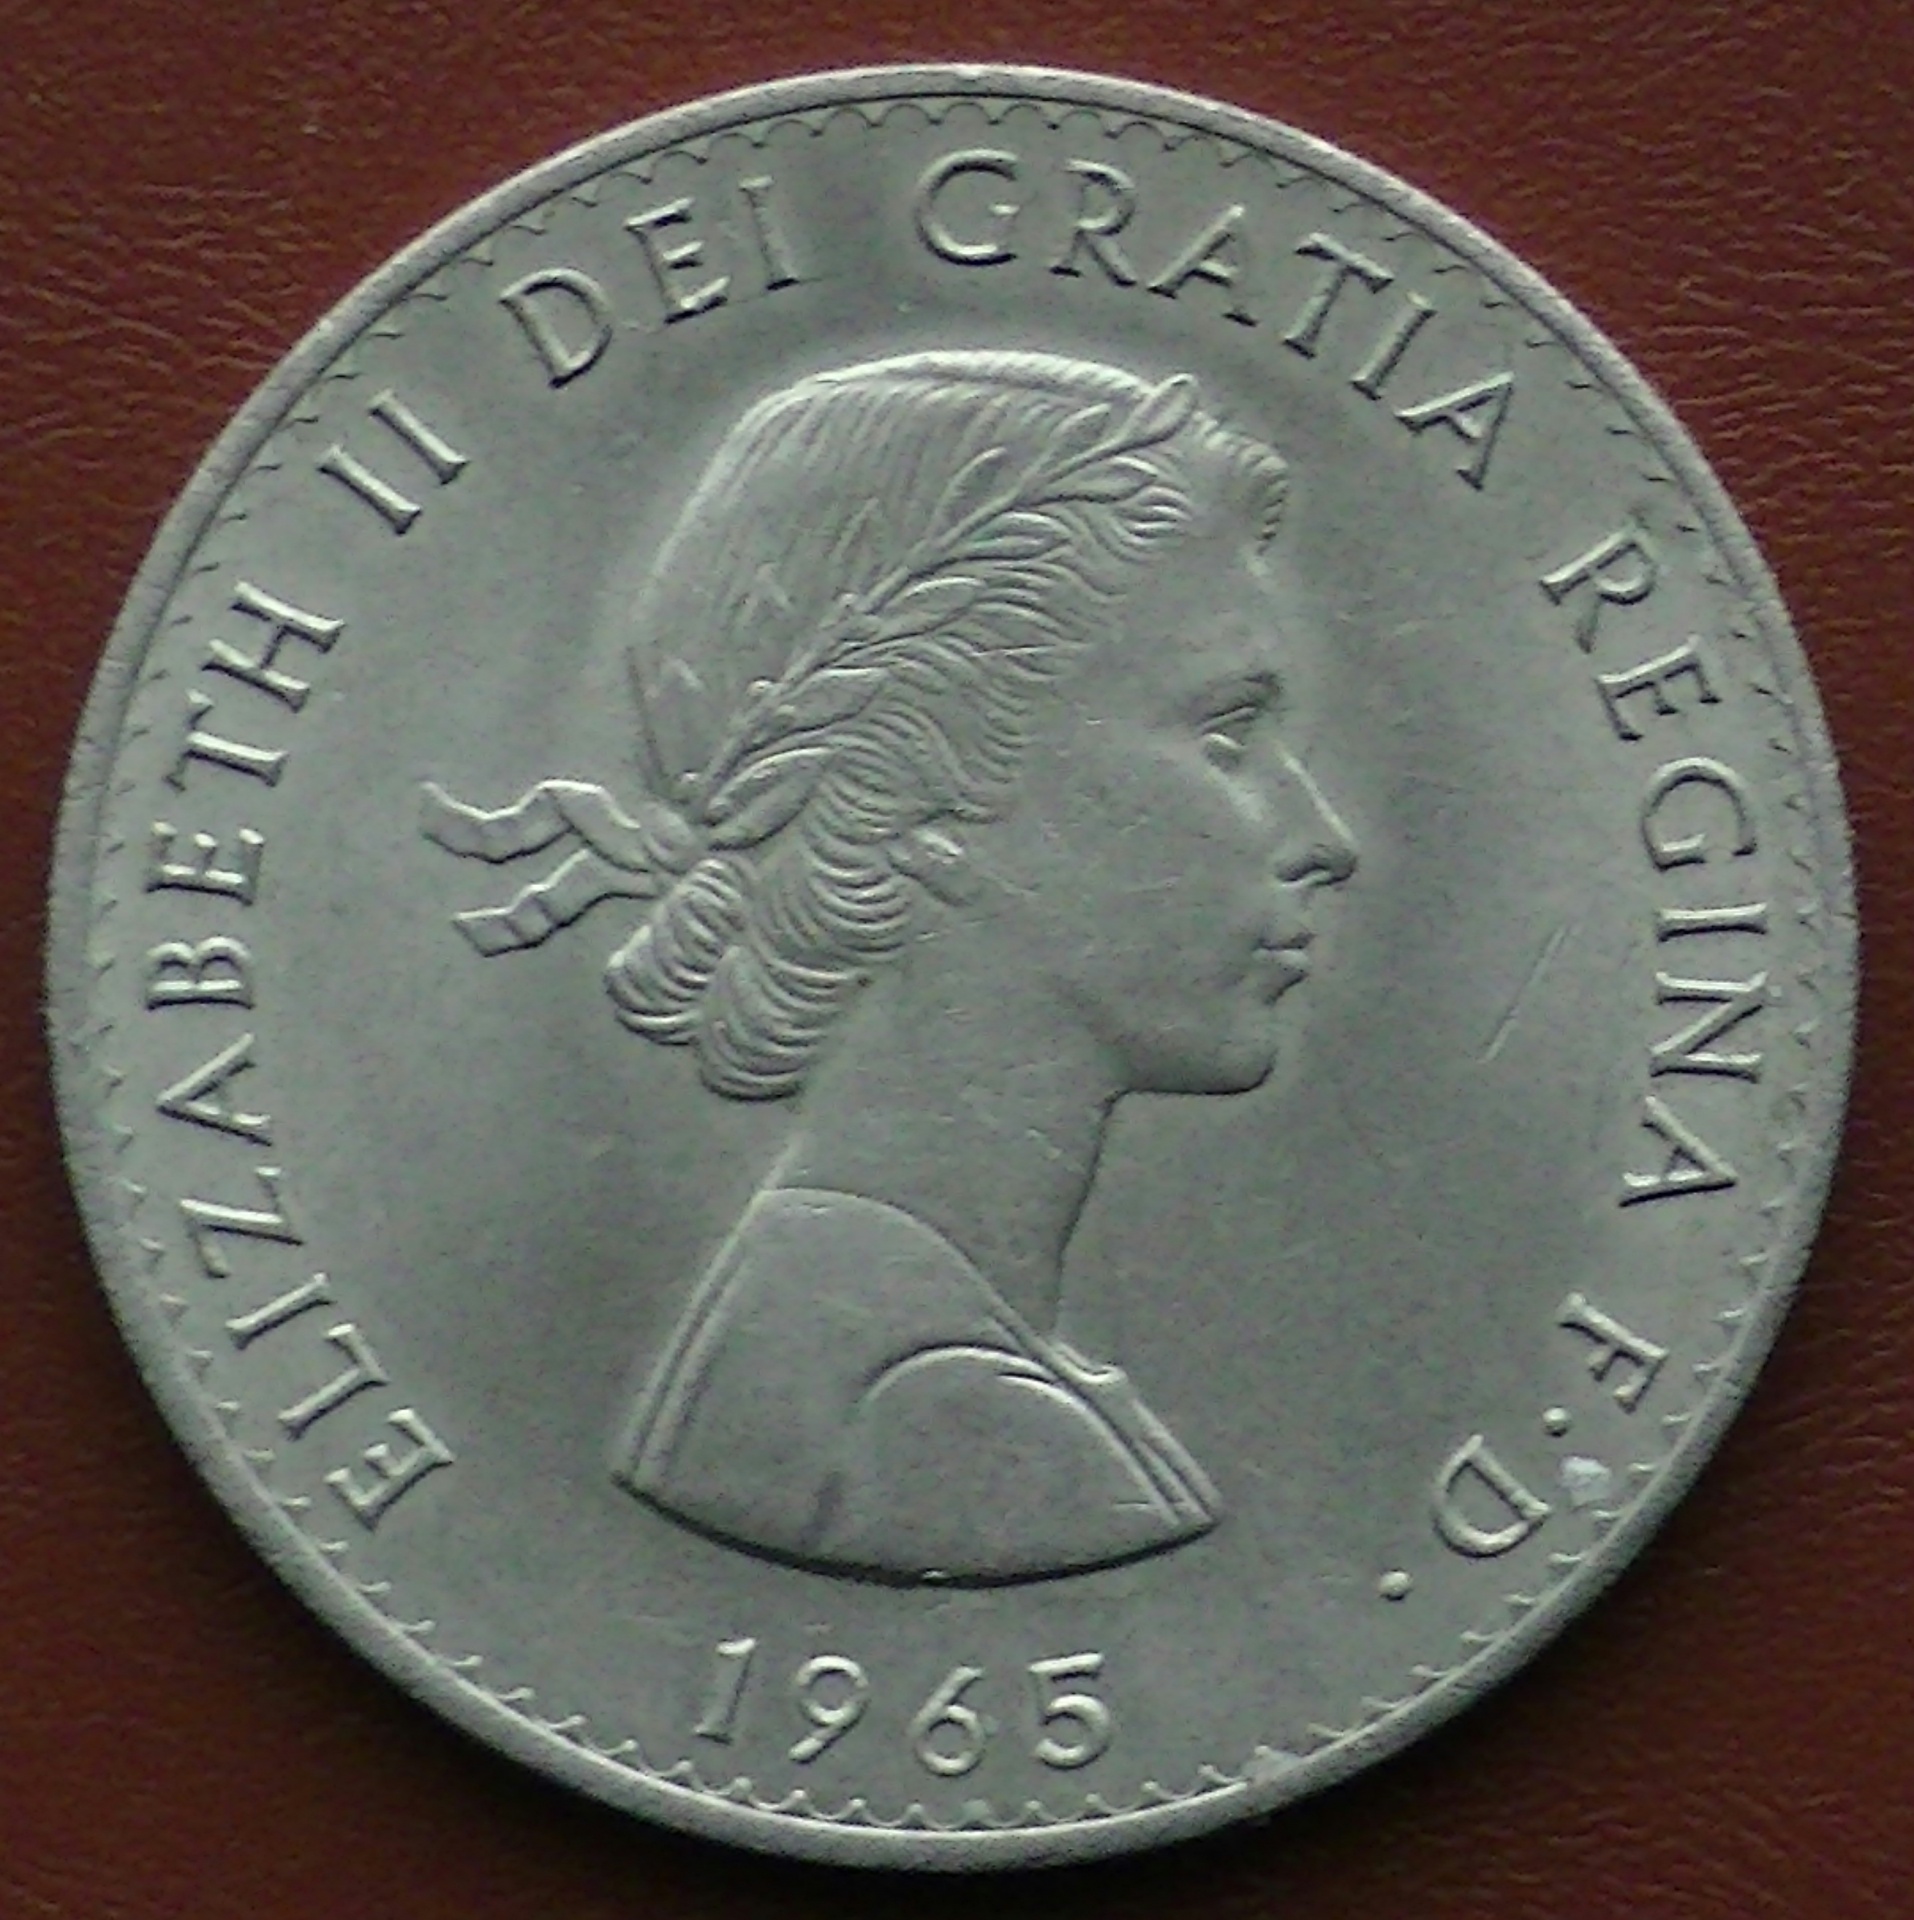 Elizabeth Churchill 1965 Coin